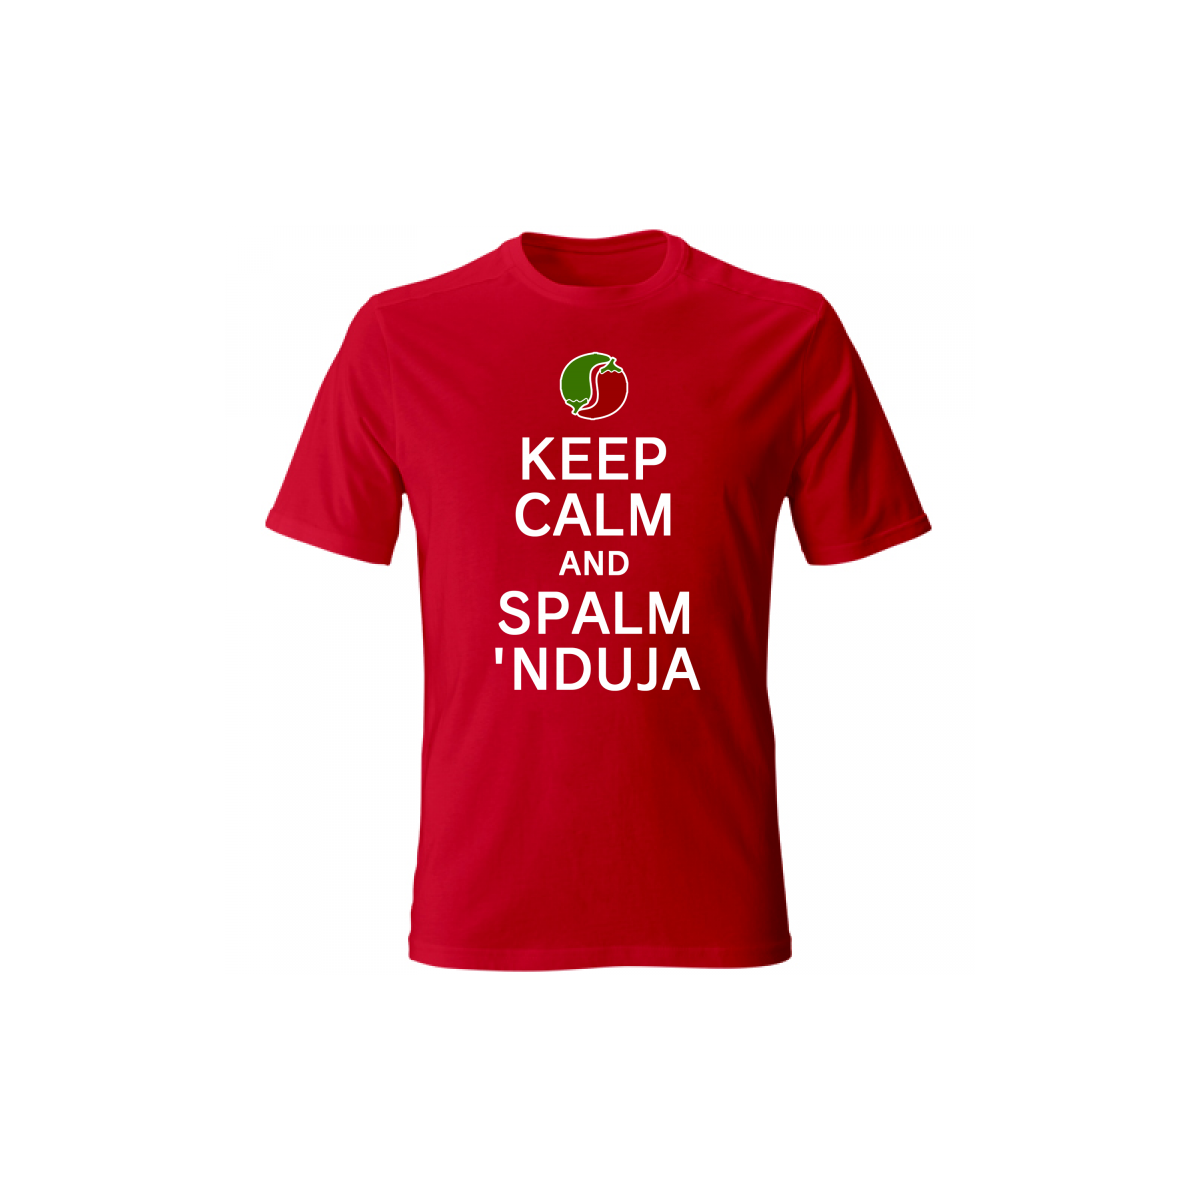 T-shirt - Keep calm and spalm nduja